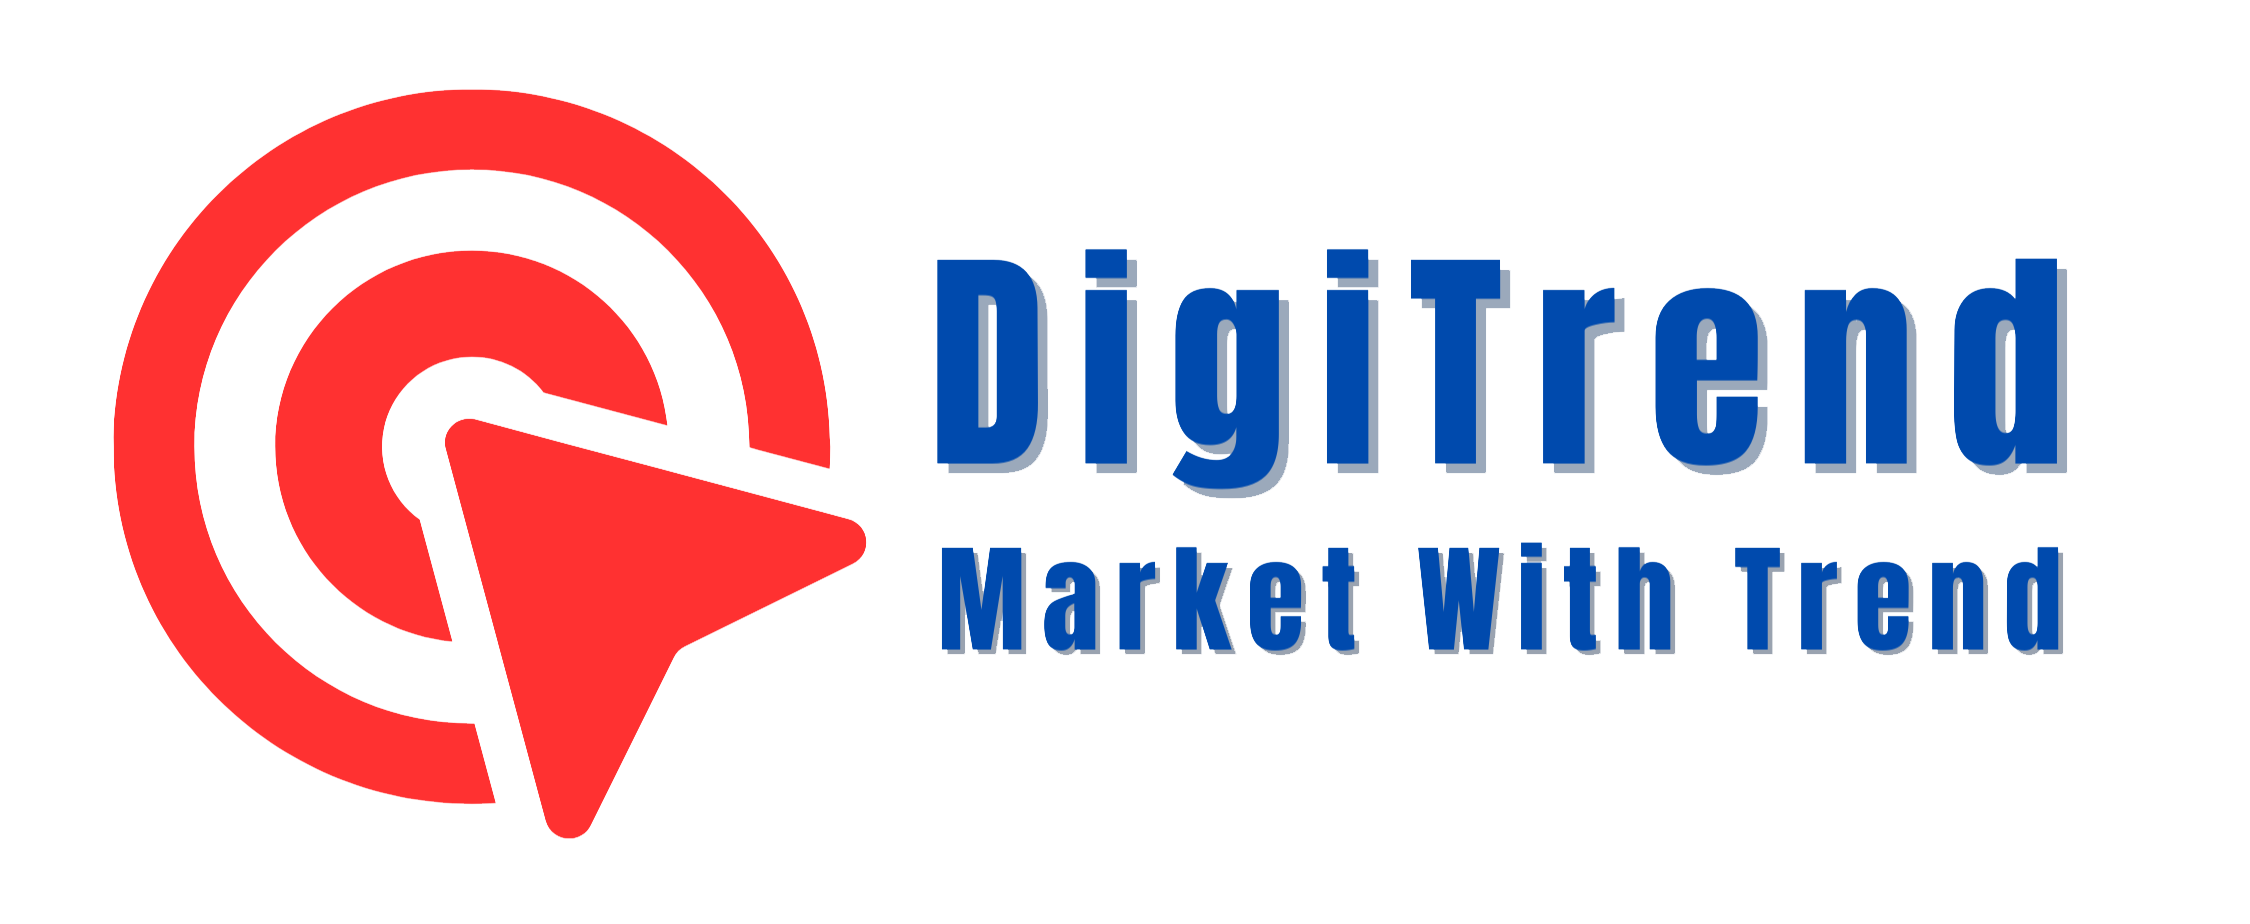 Digitrend Logo - Marketing Agency